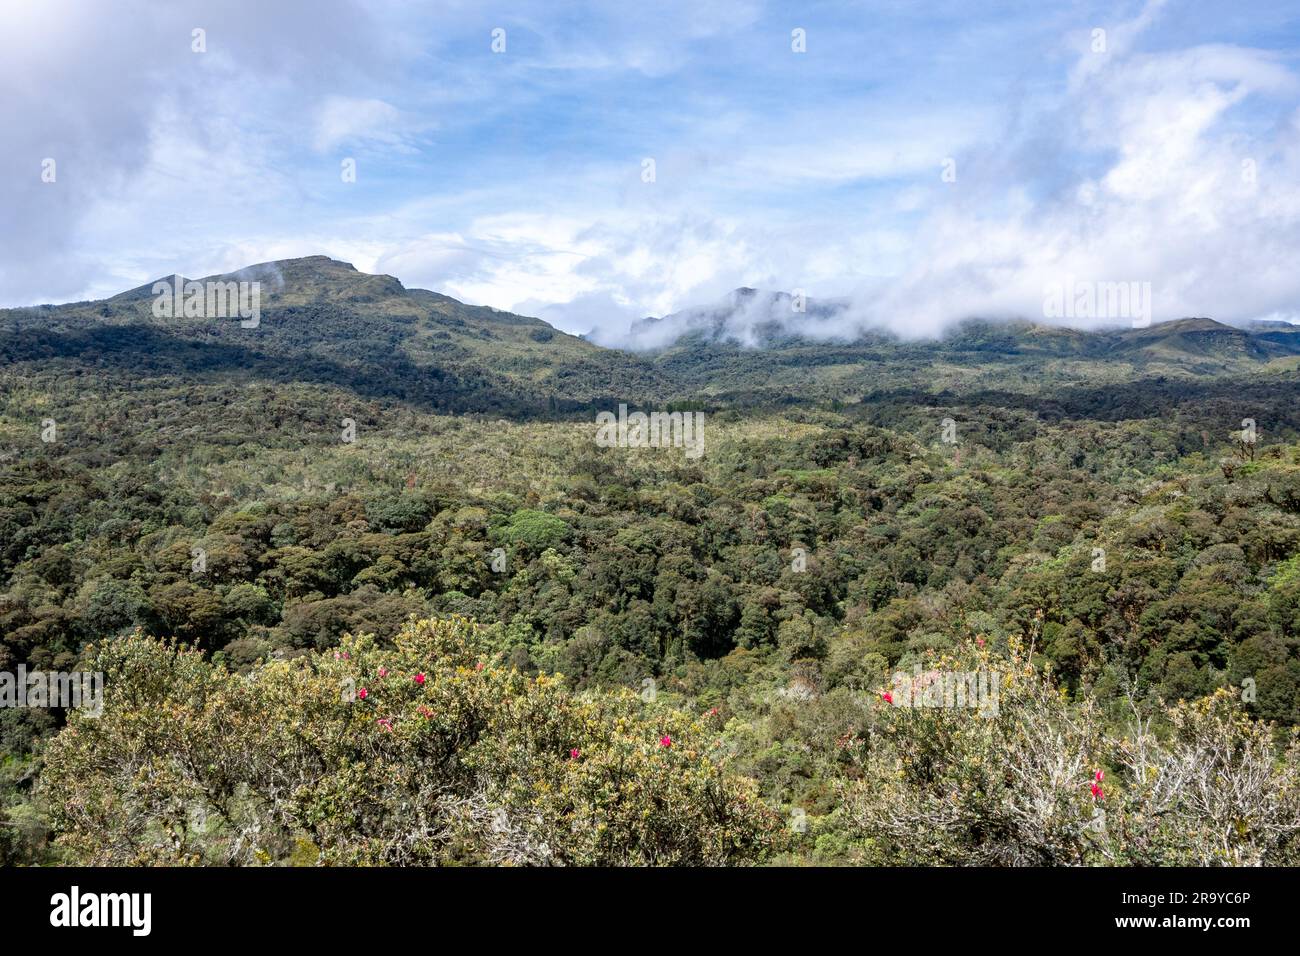 Hoch gelegene Paramo-Landschaft in den östlichen Anden. Kolumbien, Südamerika. Stockfoto